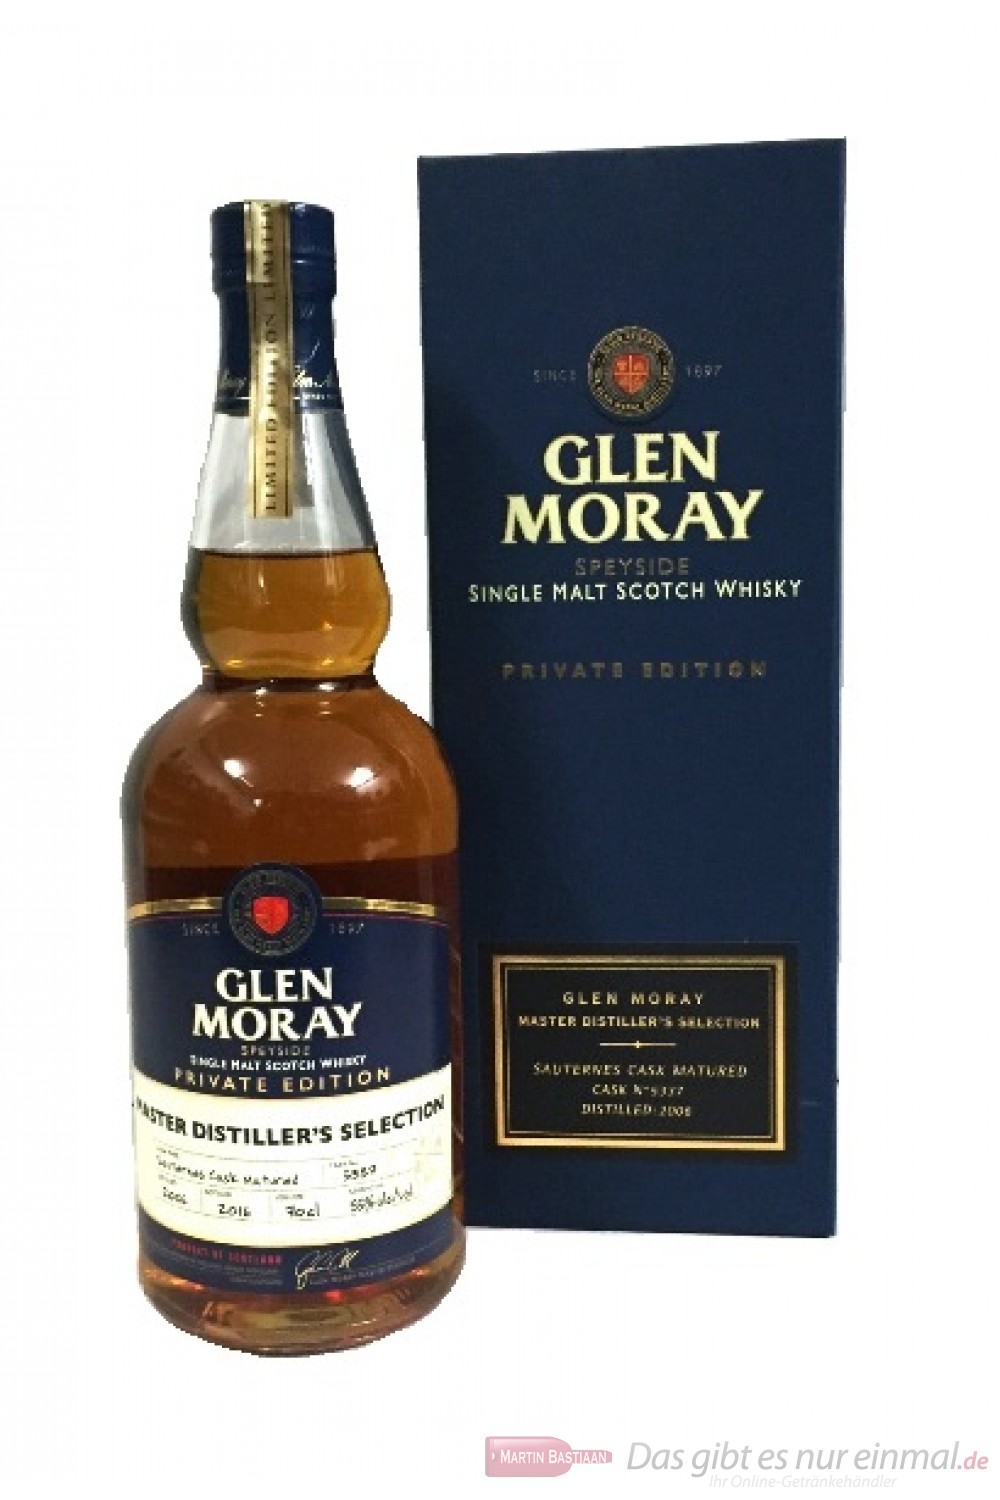 Glen Moray Sauternes Cask Matured